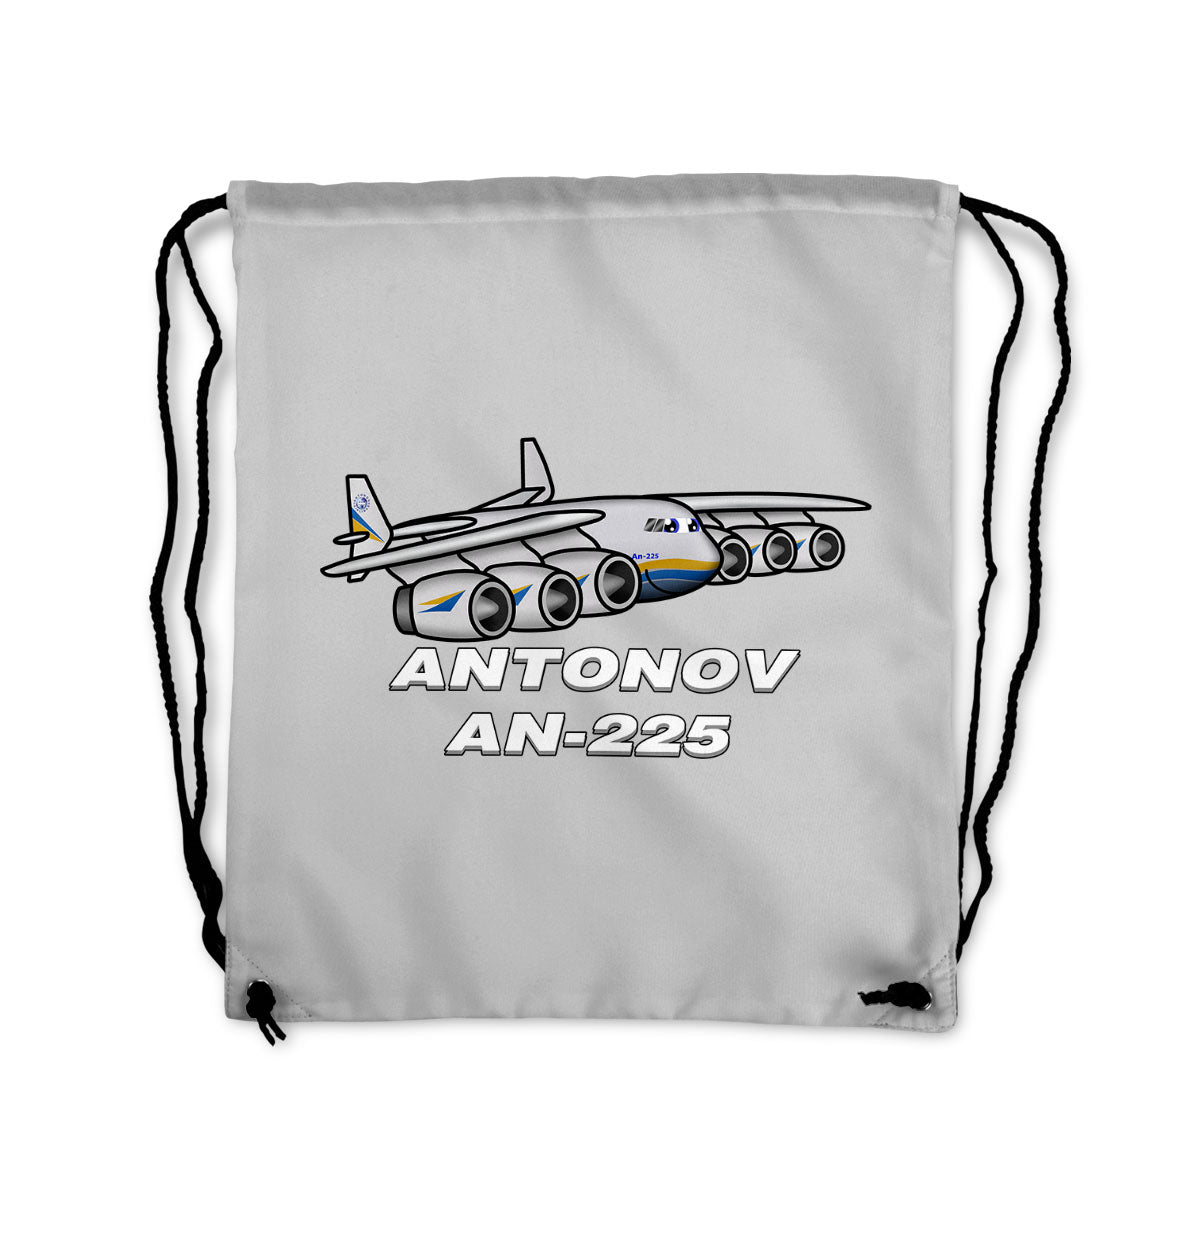 Antonov AN-225 (25) Designed Drawstring Bags